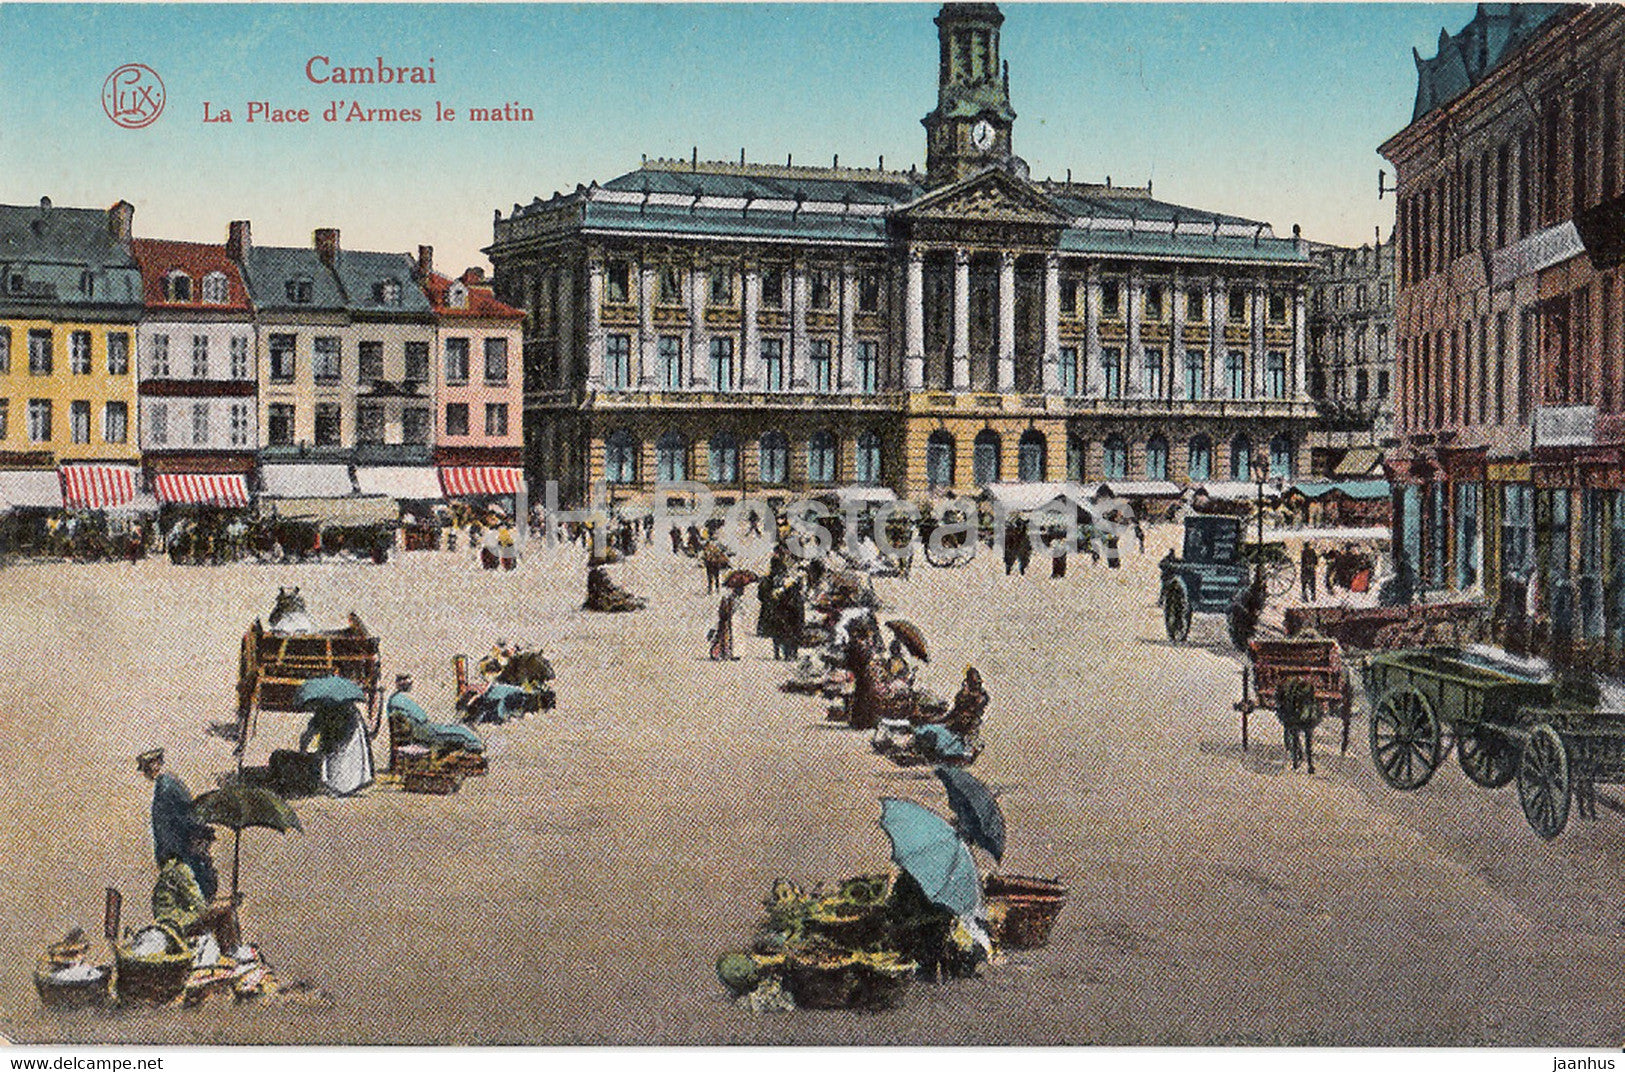 Cambrai - La Place d'Armes le Matin - old postcard - France - used - JH Postcards